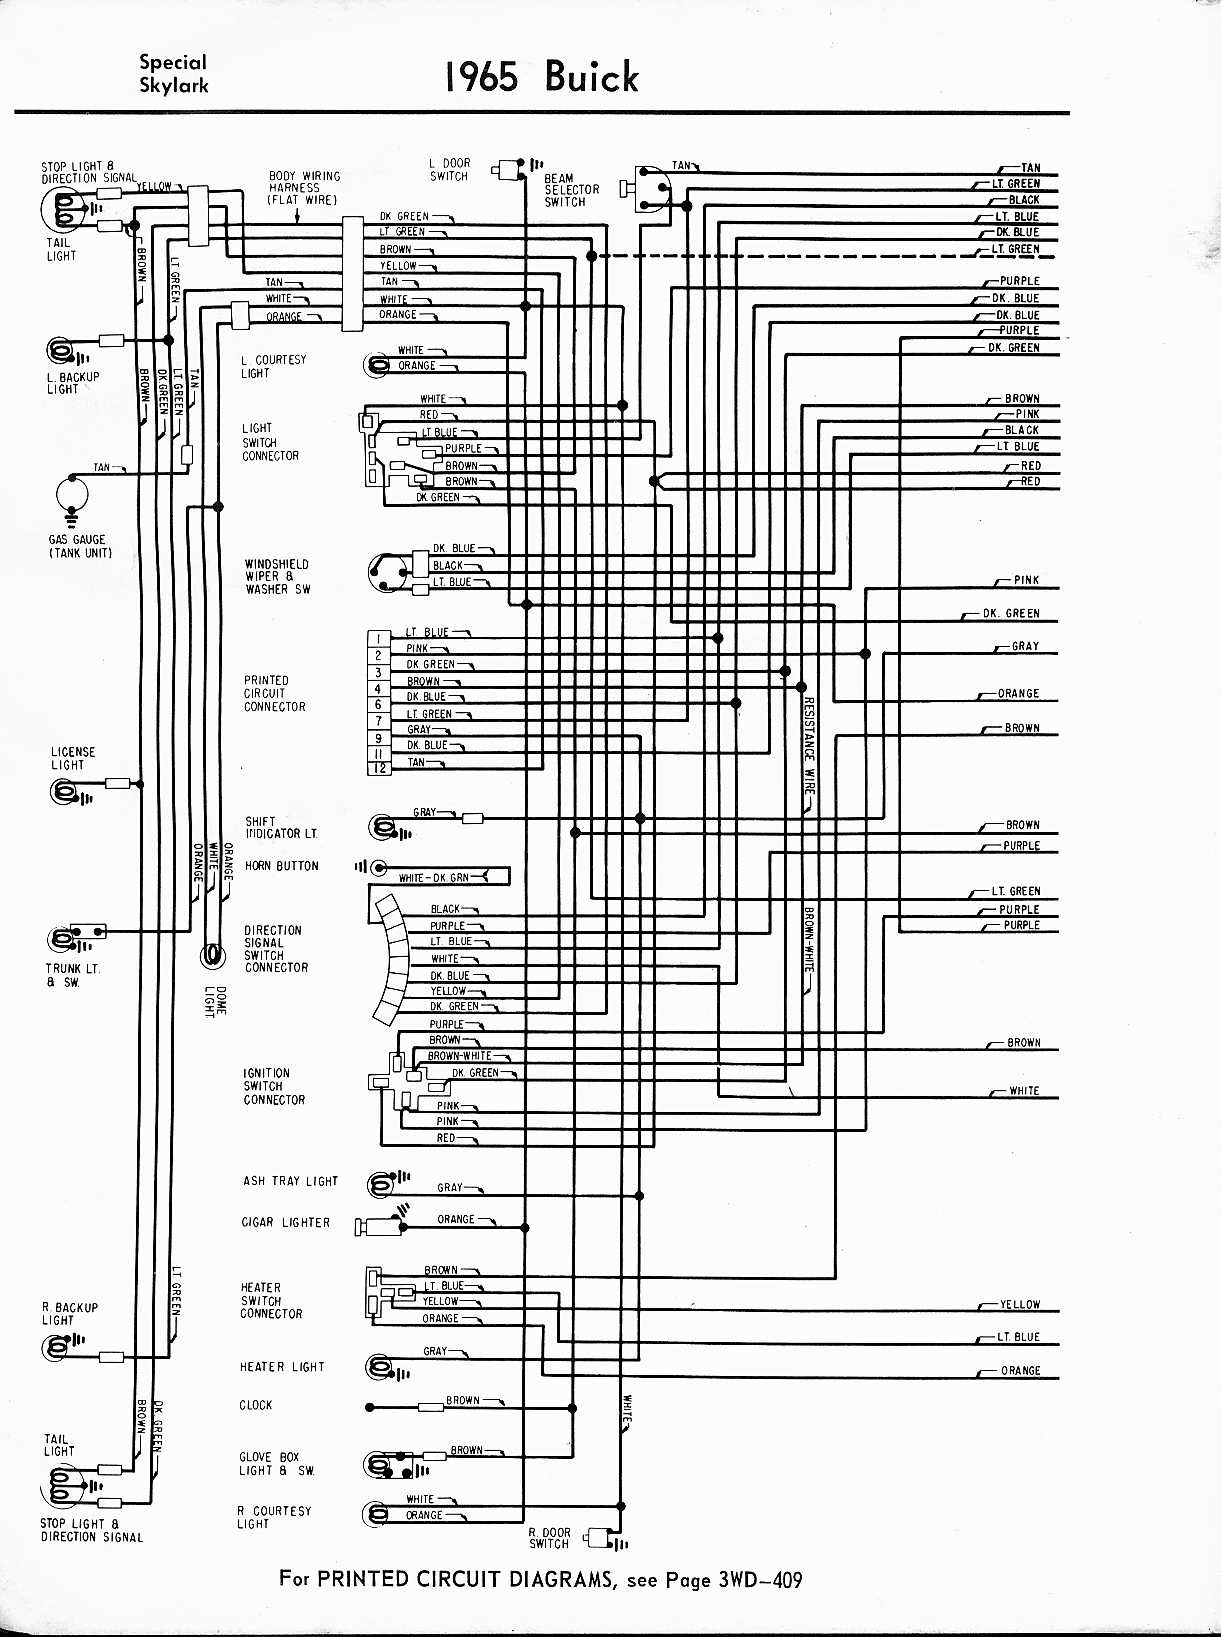 1965 Skylark LQ9 Retrofit / Swap - Build Thread - Page 10 - LS1TECH